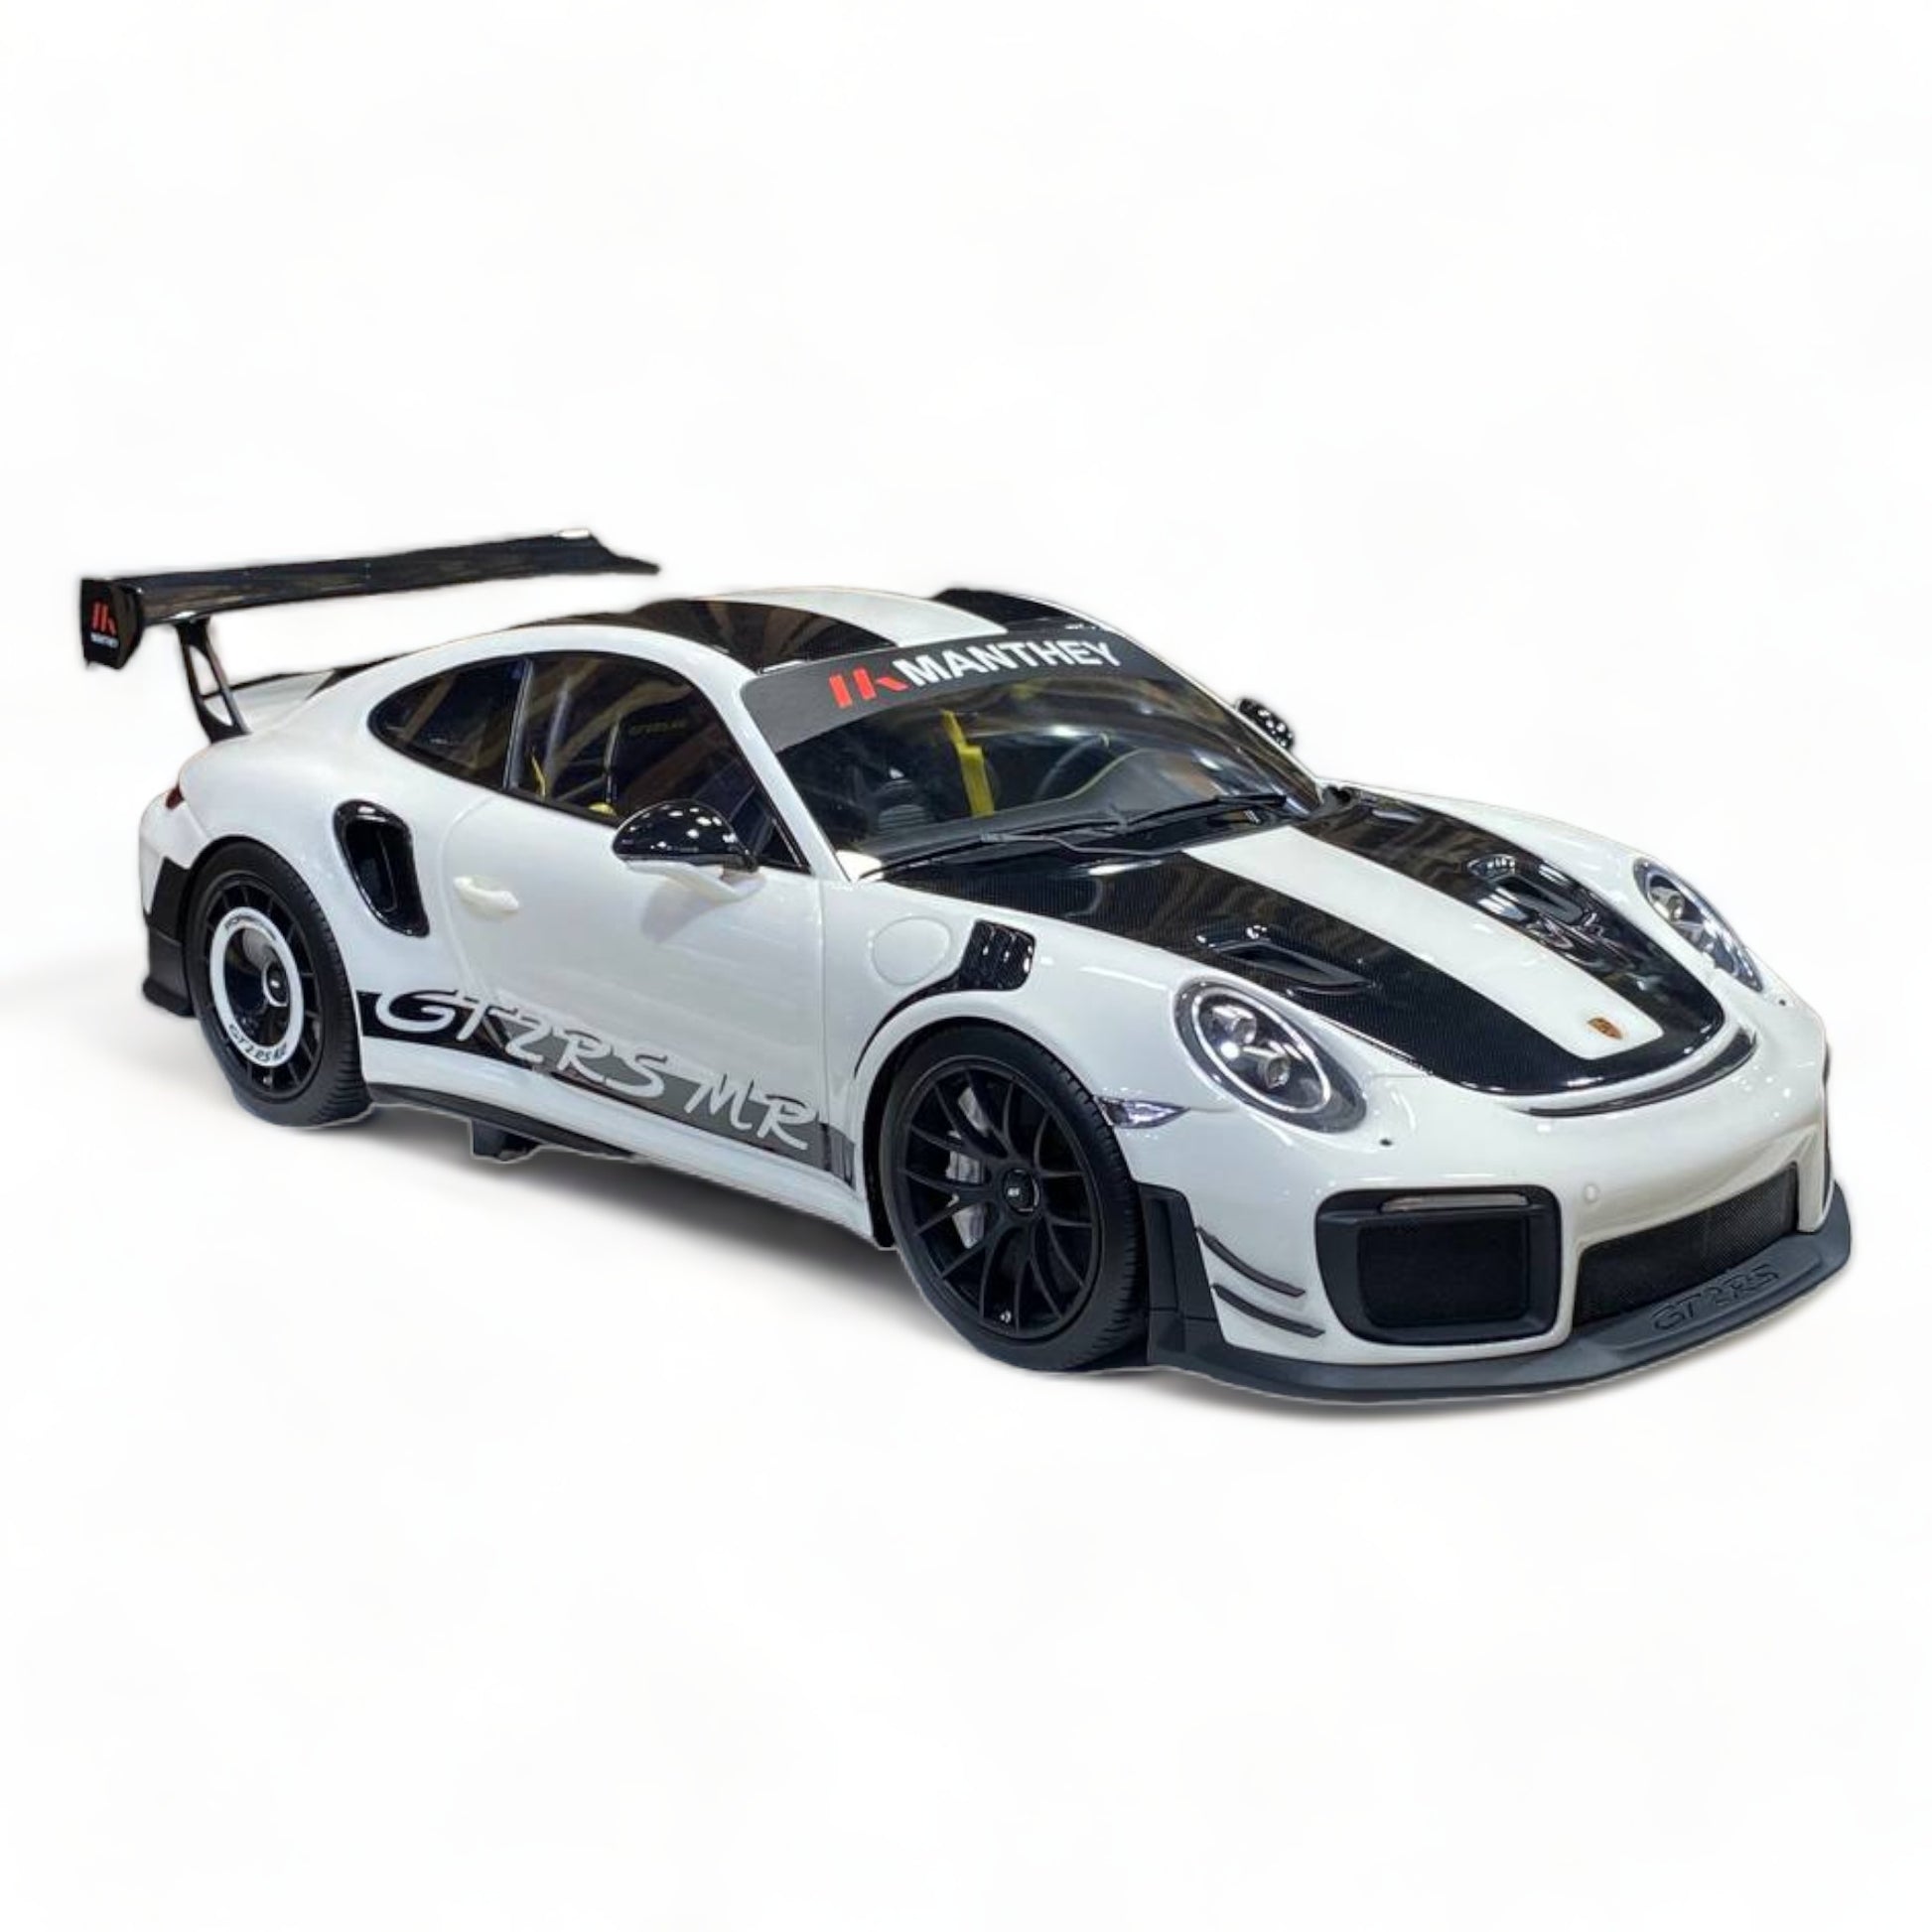 1/18 DINO Porsche 911 GT2 RS in Luminous Blue  Limited Edition|Sold in Dturman.com Dubai UAE.